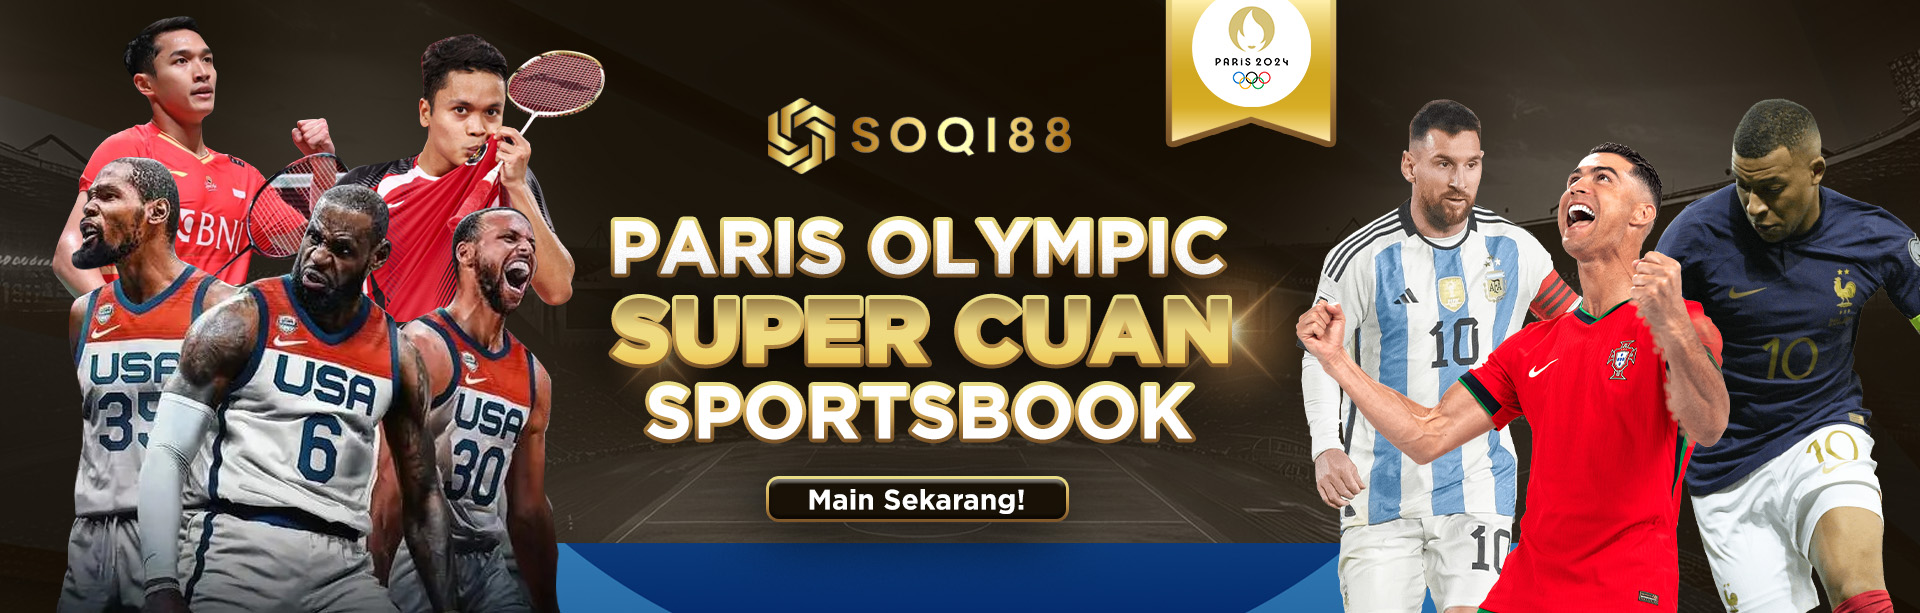 Olympic Paris Super CUAN